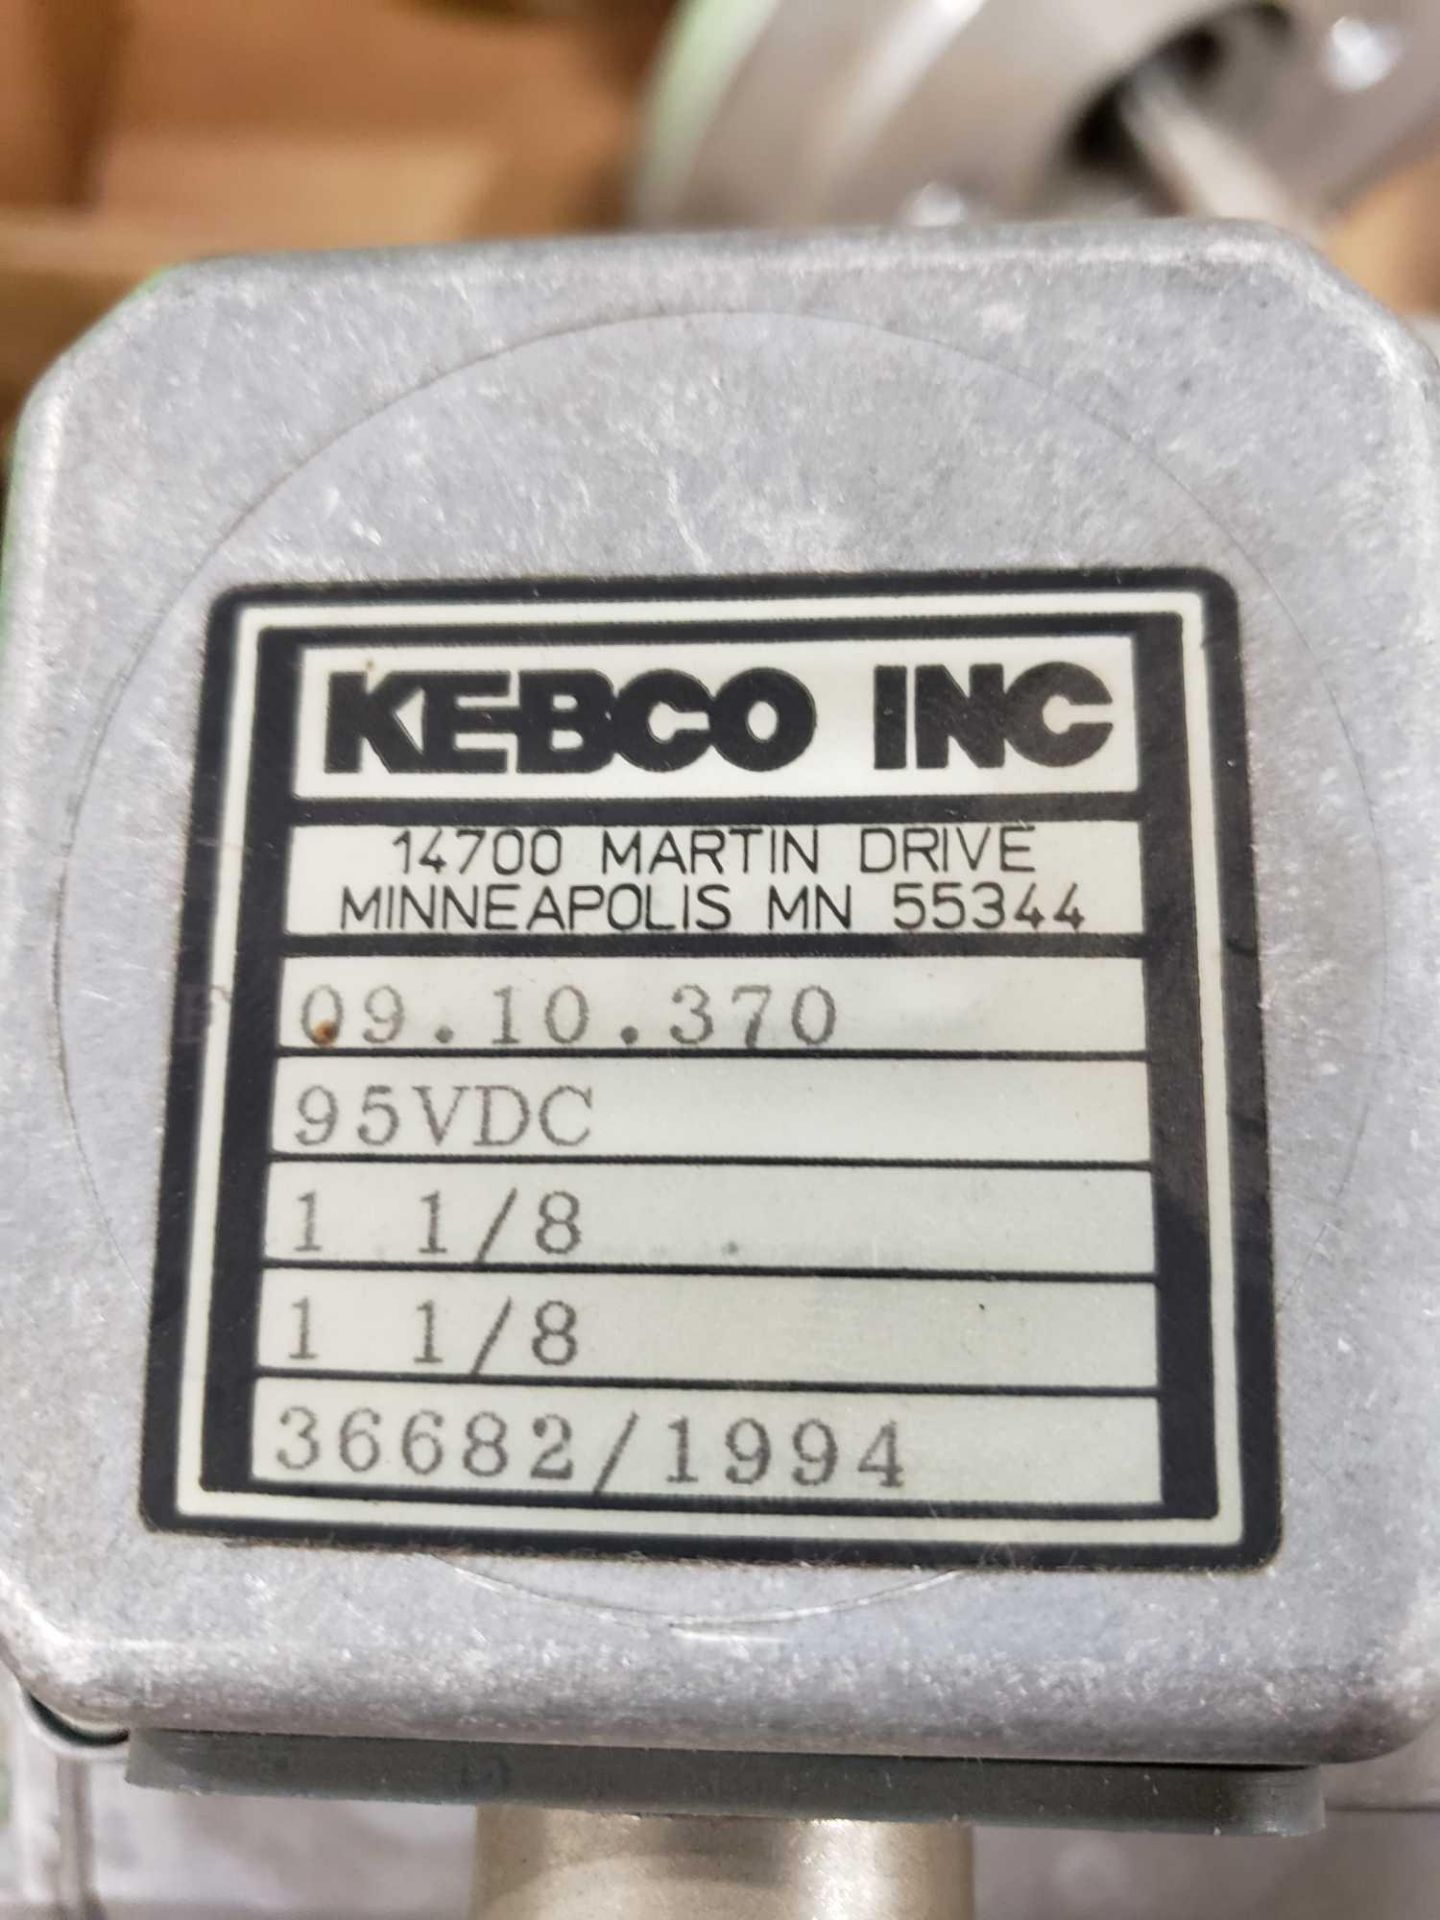 Kebco model 09.10.370 clutch brake. New with minor shelf wear. - Image 2 of 2